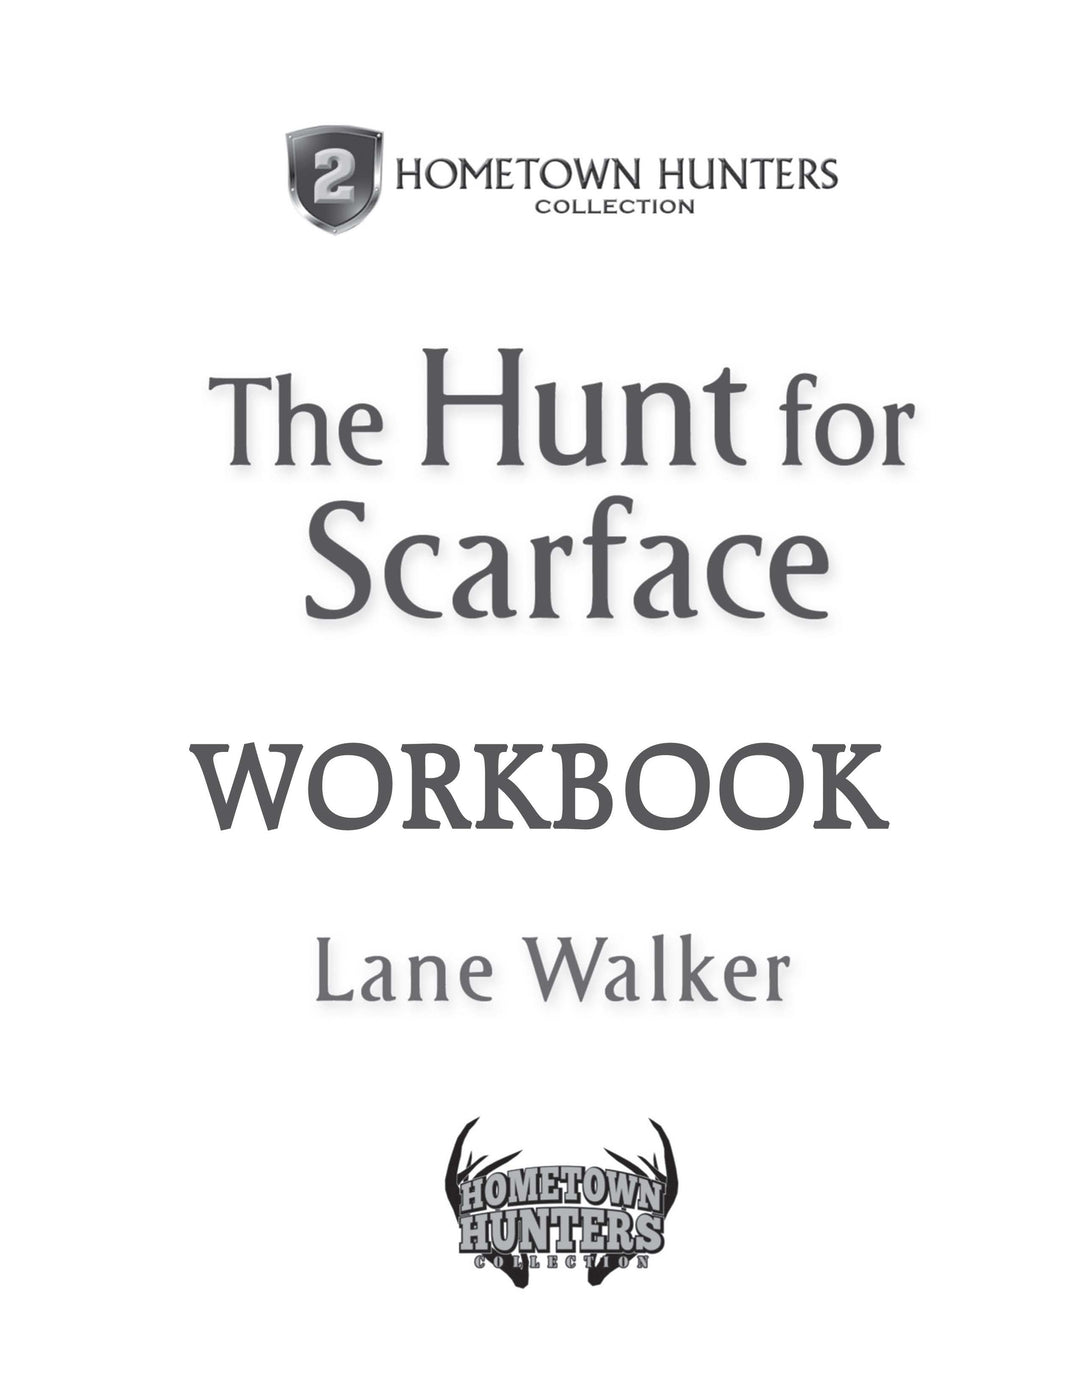 Printable Workbooks - Hometown Hunters – Lane Walker Books